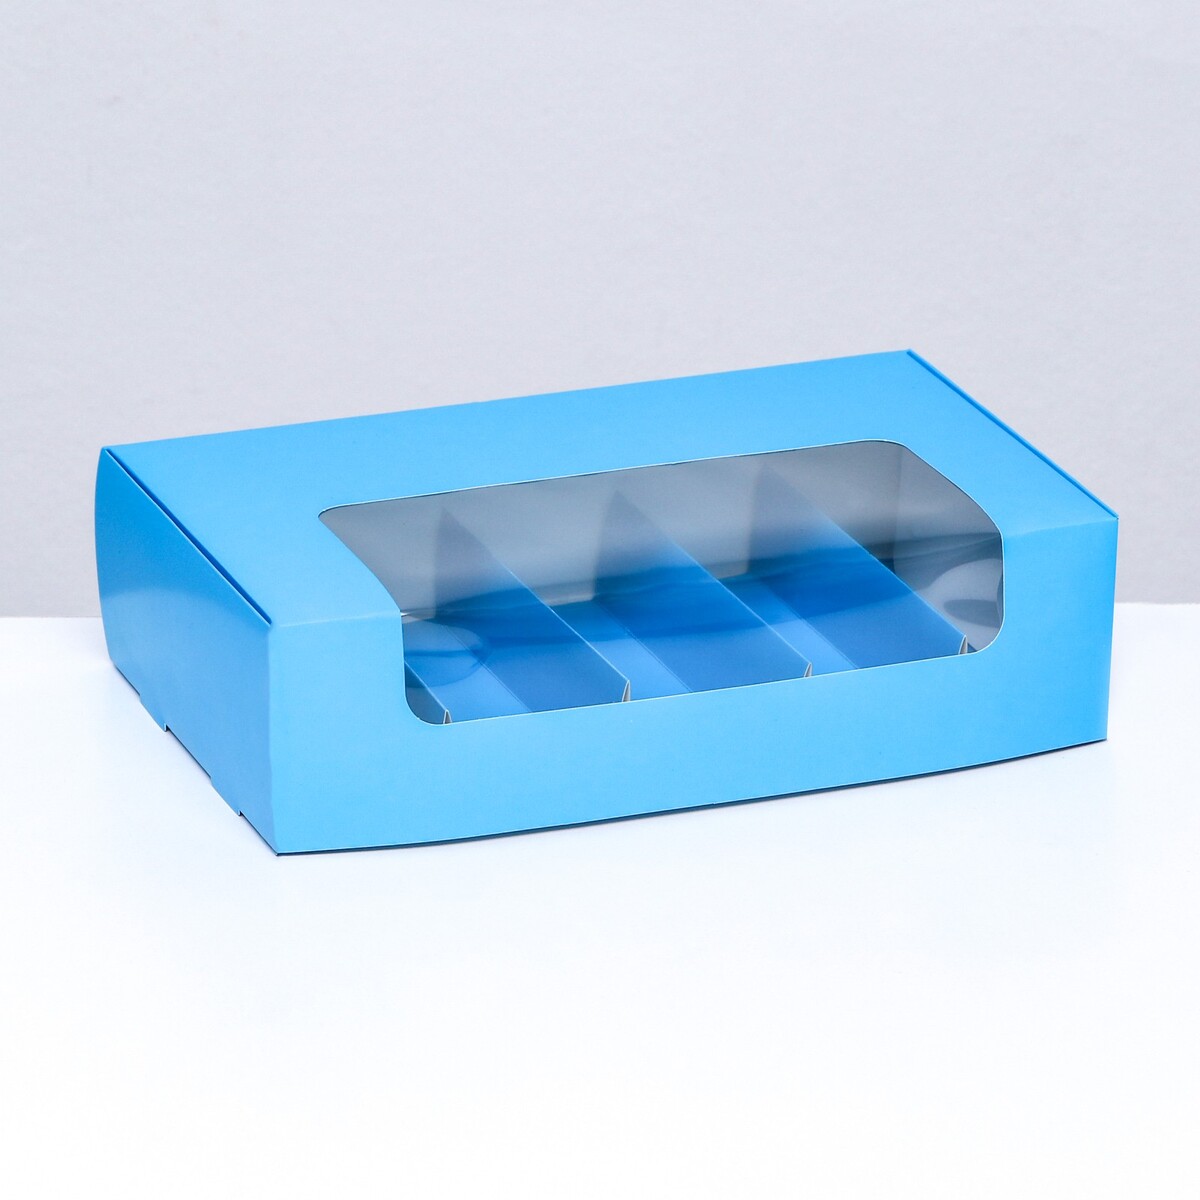 Коробка складная, под 5 эклеров голубой, 25 х 15 х 6,6 см коробка складная под 5 эклеров голубой 25 х 15 х 6 6 см